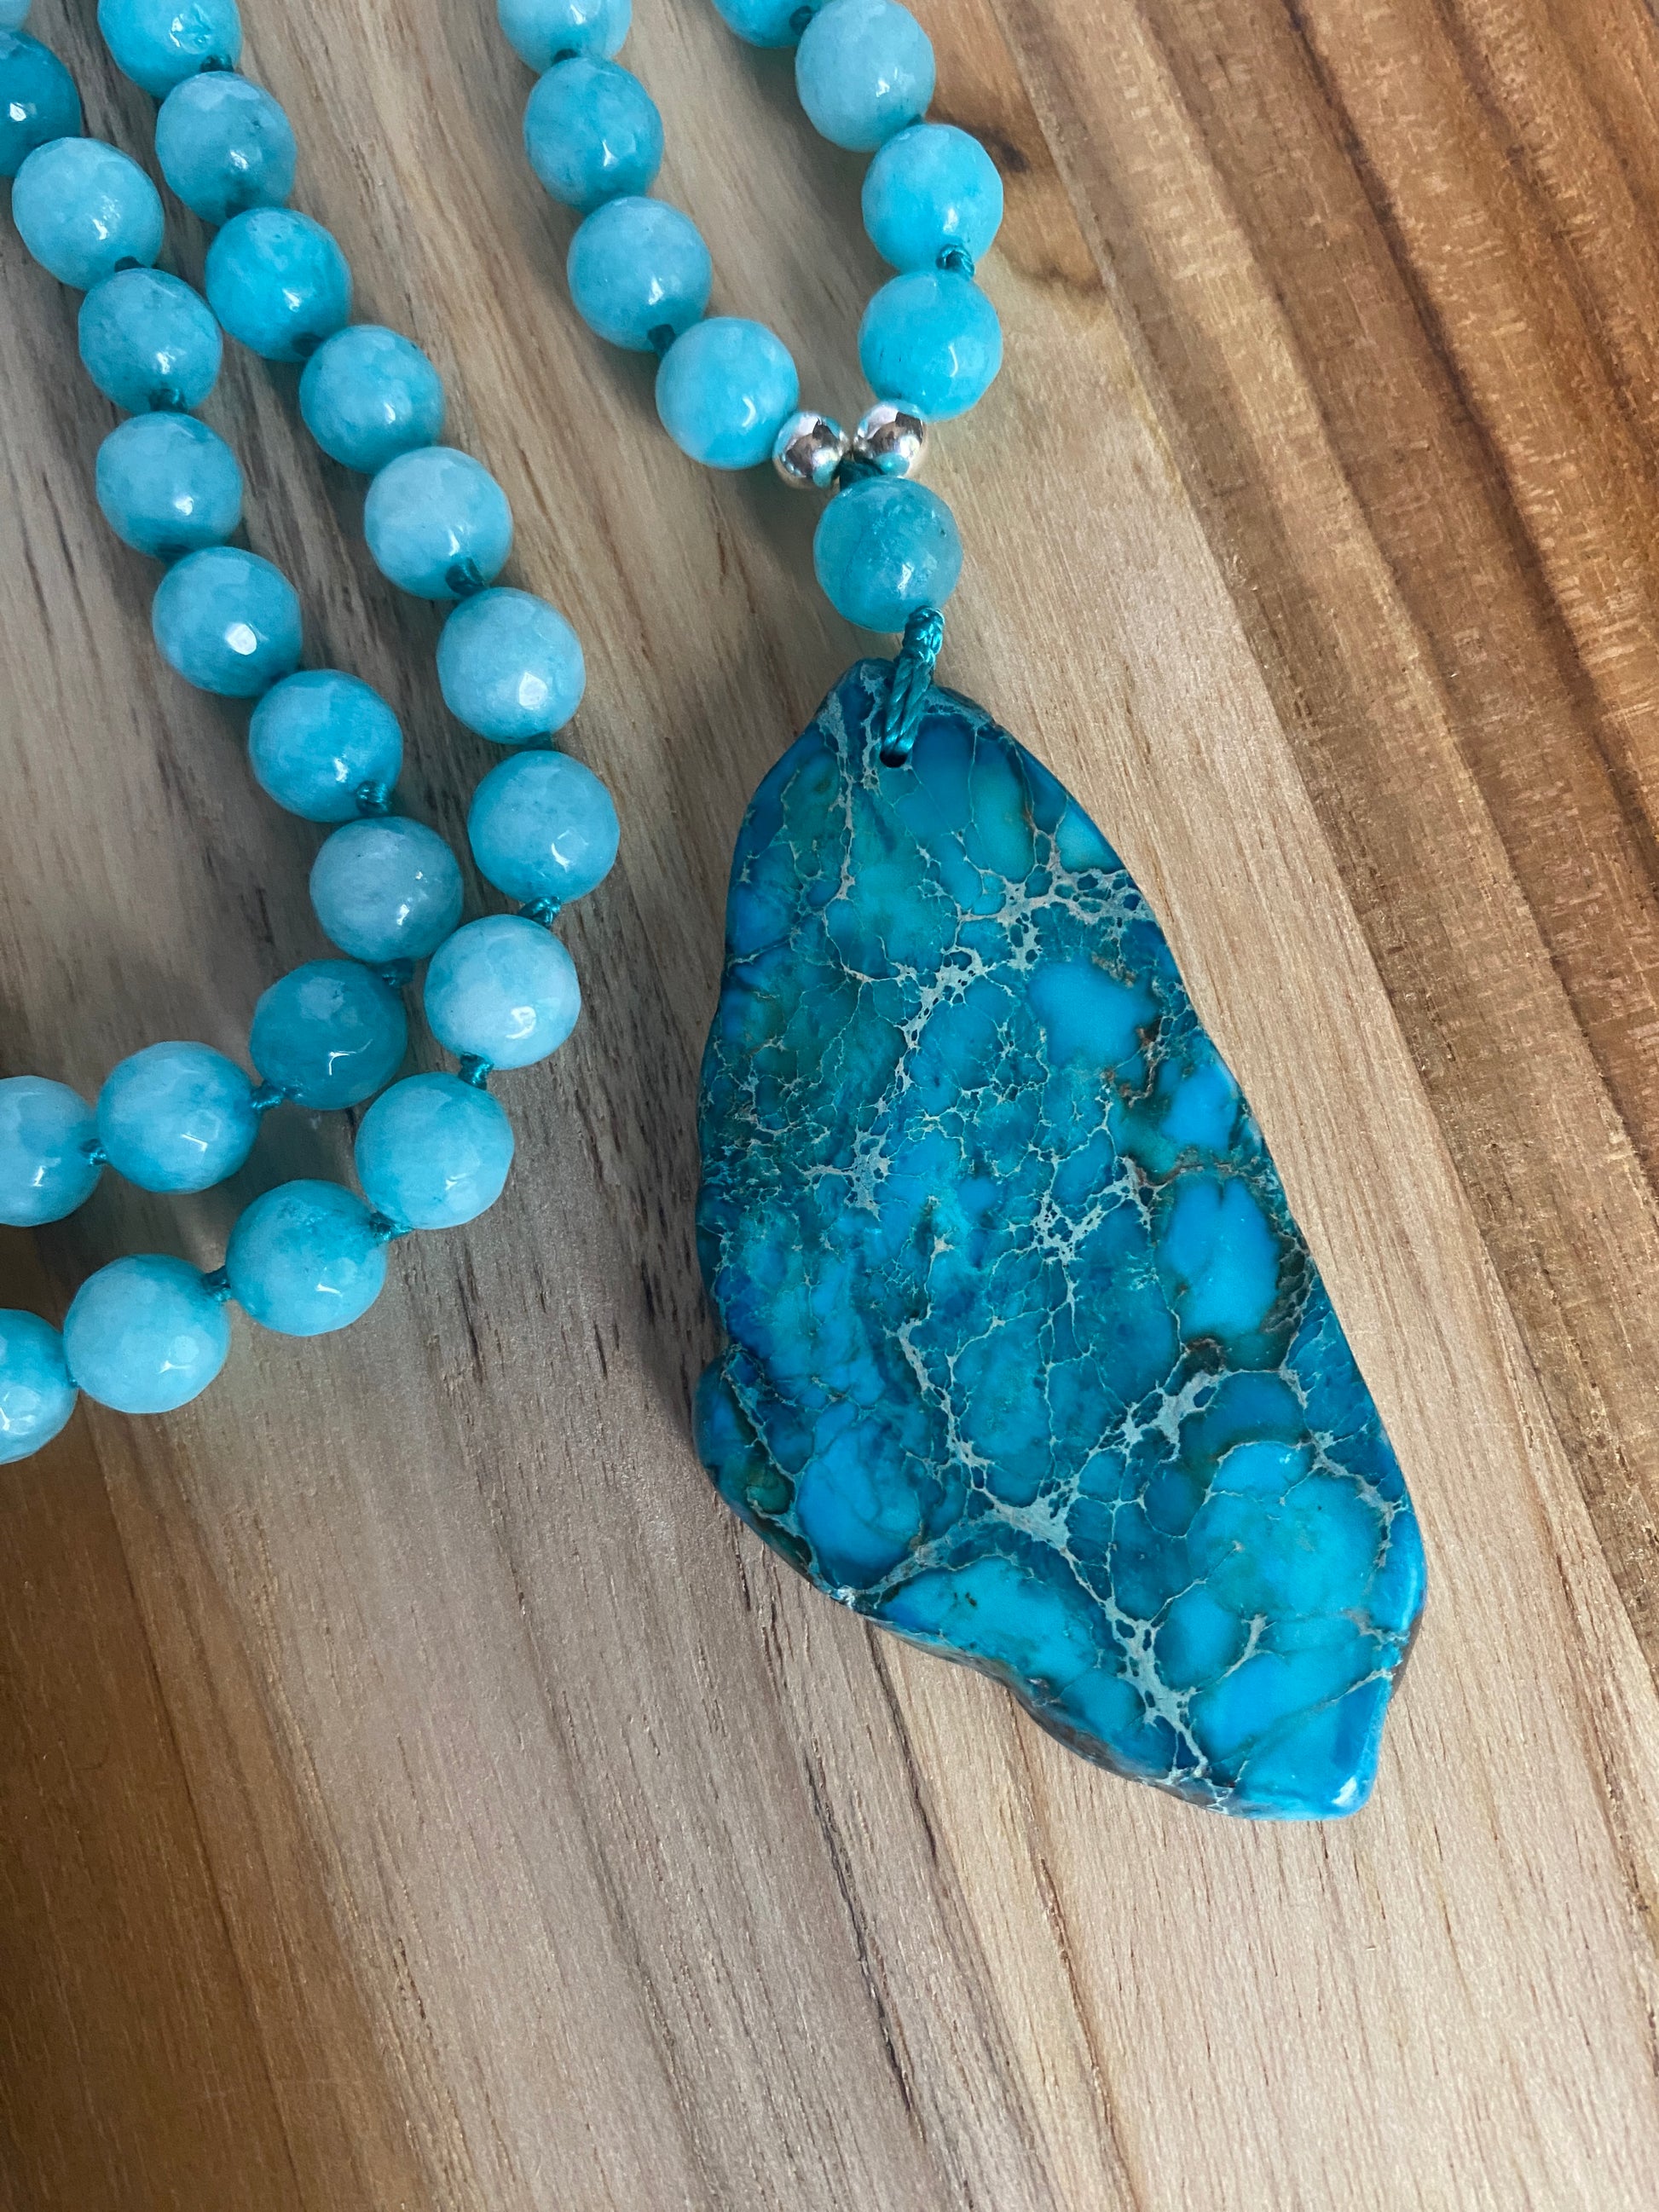 28" Long Ocean Blue Sea Sediment Jasper Pendant Necklace with Agate Beads - My Urban Gems